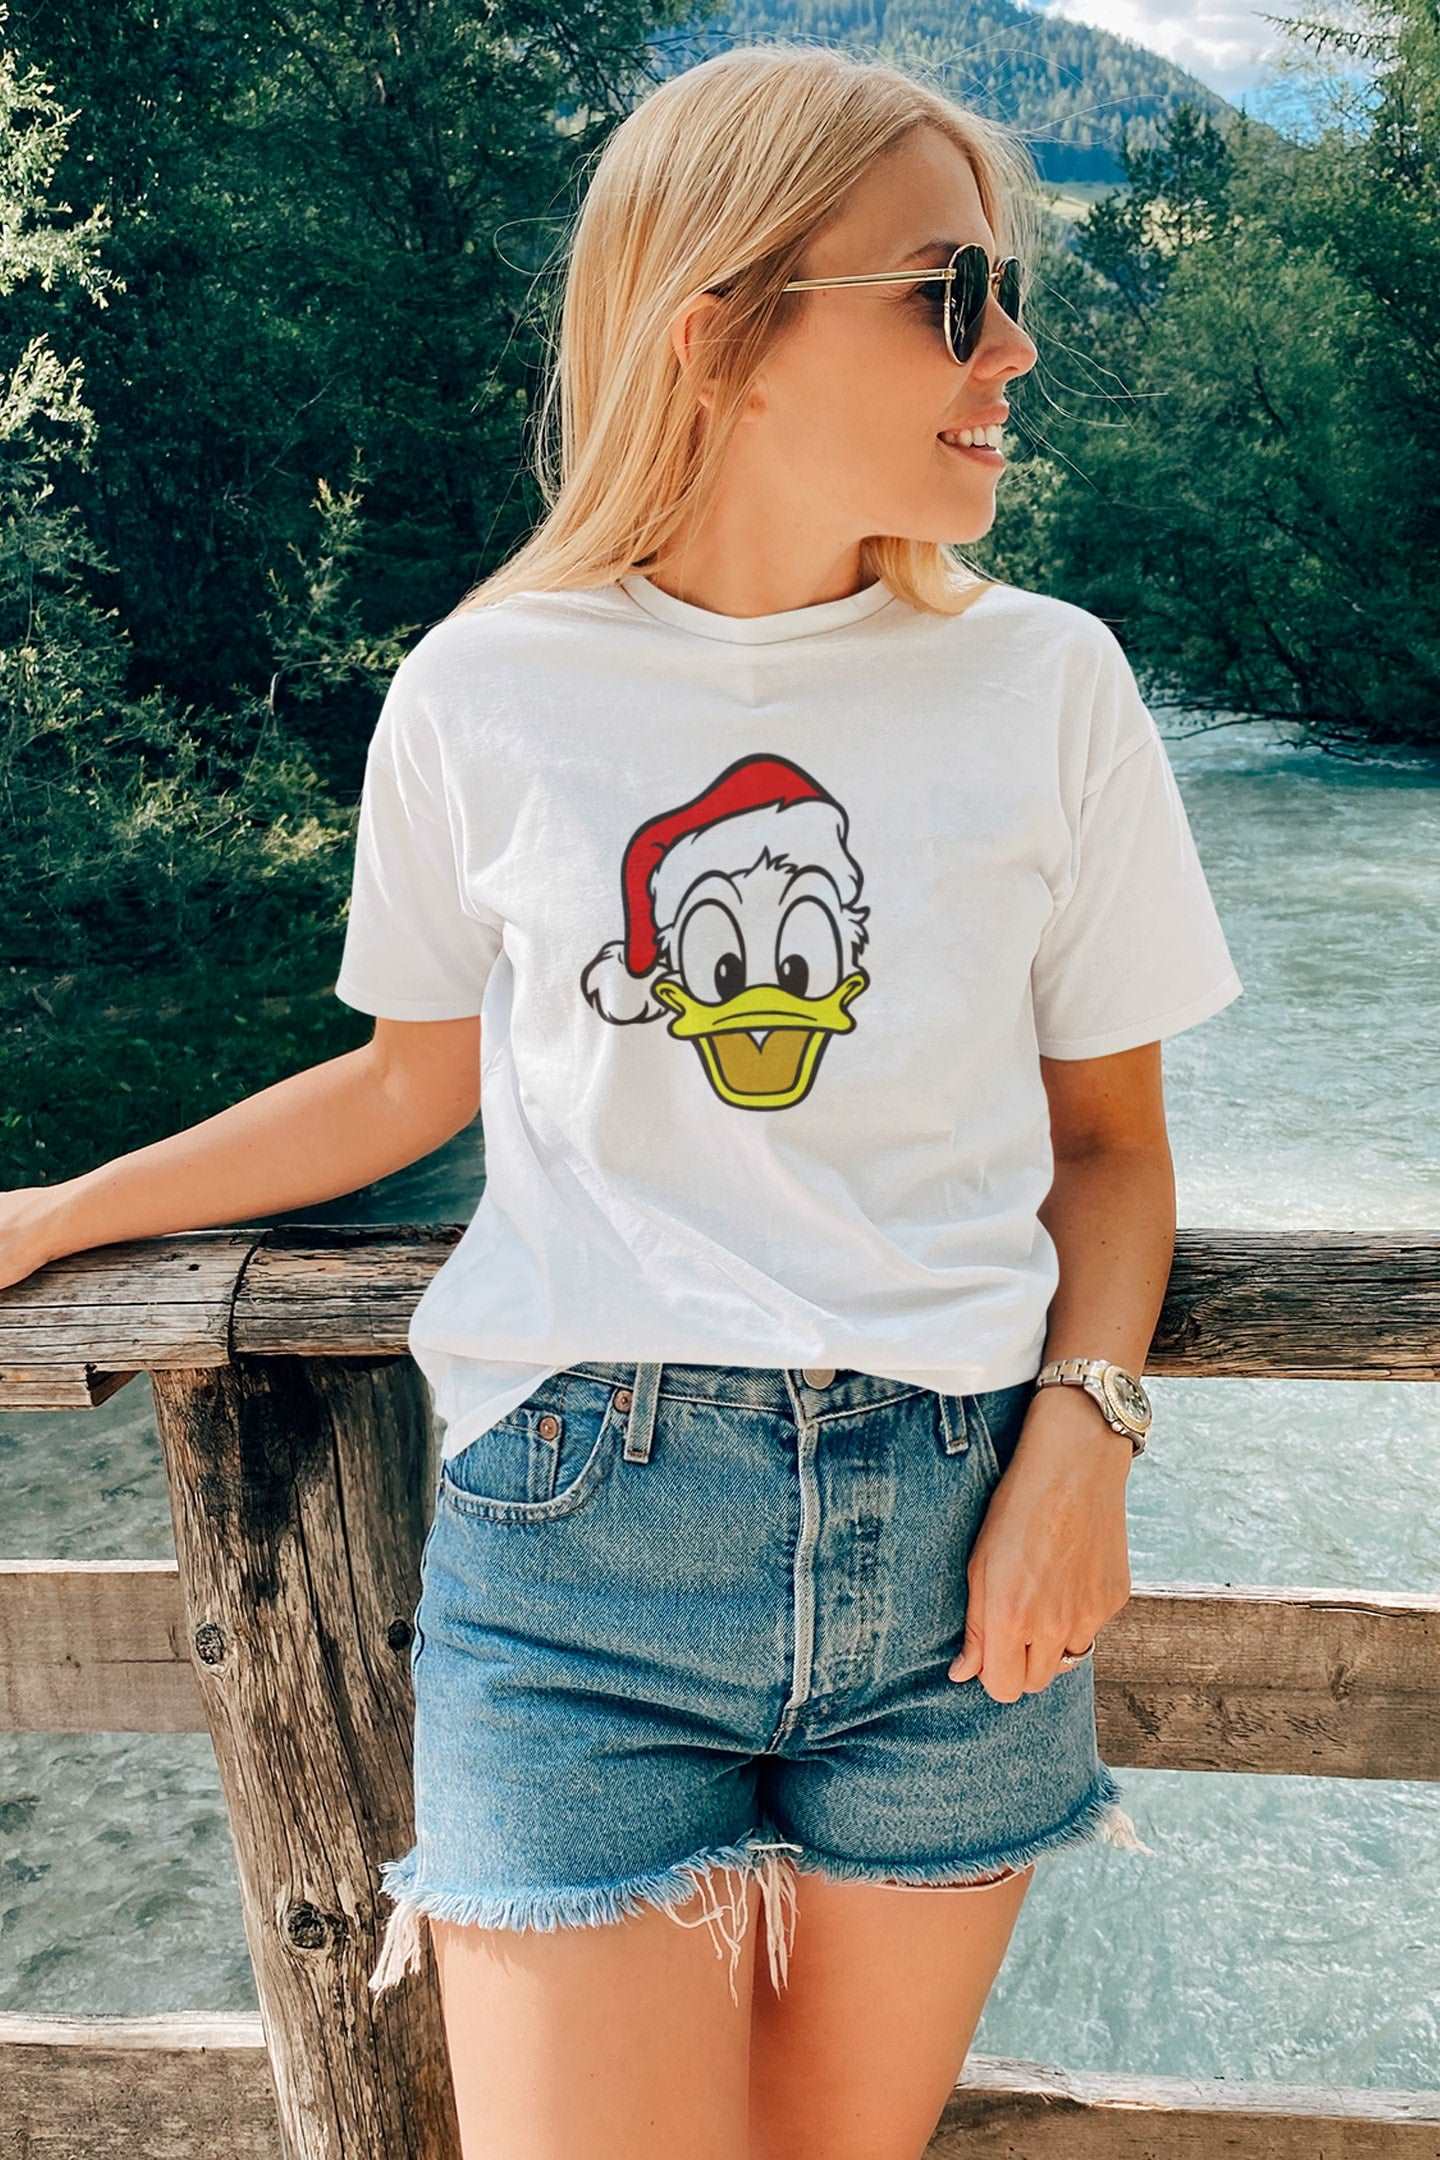 Donald Duck Happy Face T-Shirt